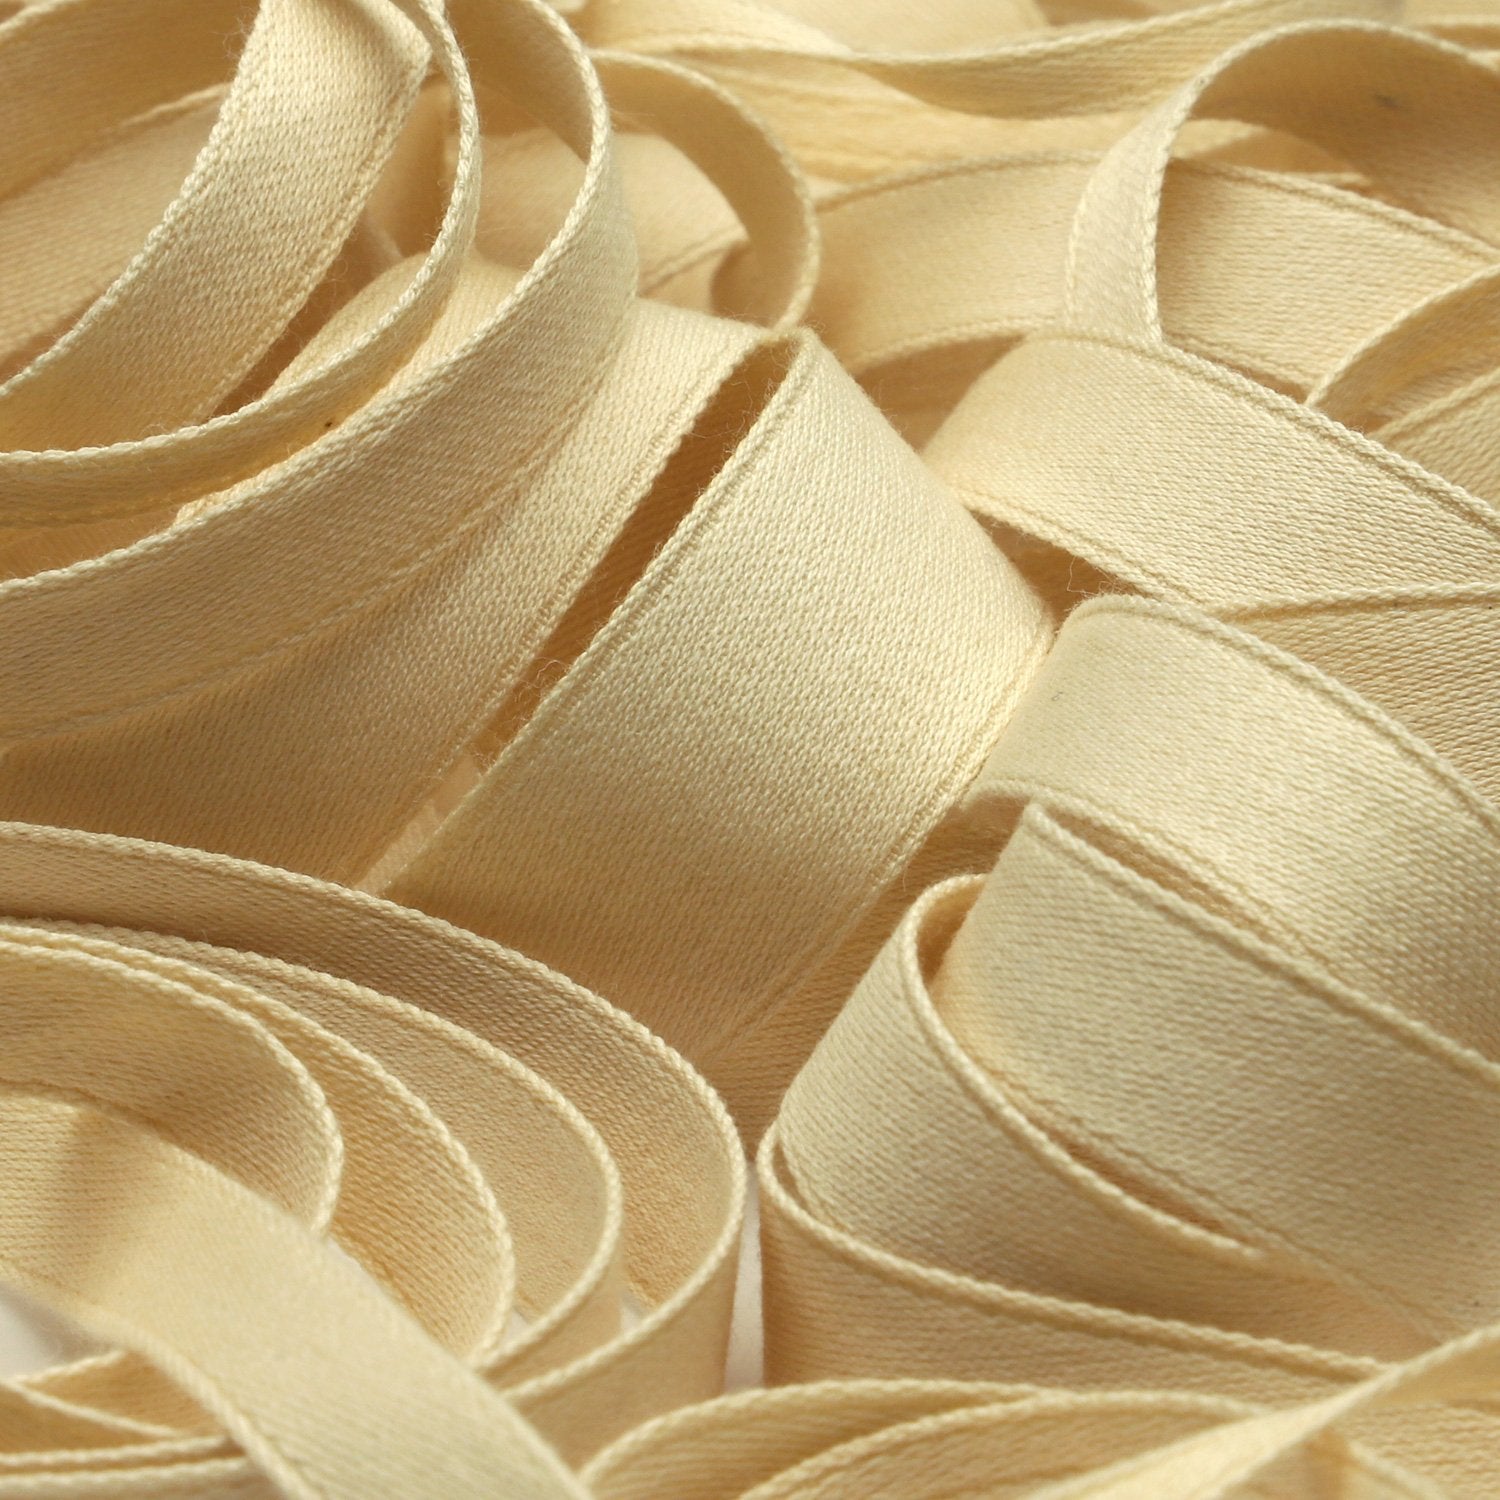 FUJIYAMA RIBBON [Wholesale] Organic Cotton Double-Face Satin Ribbon 3mm Ecru 30 Meters Roll